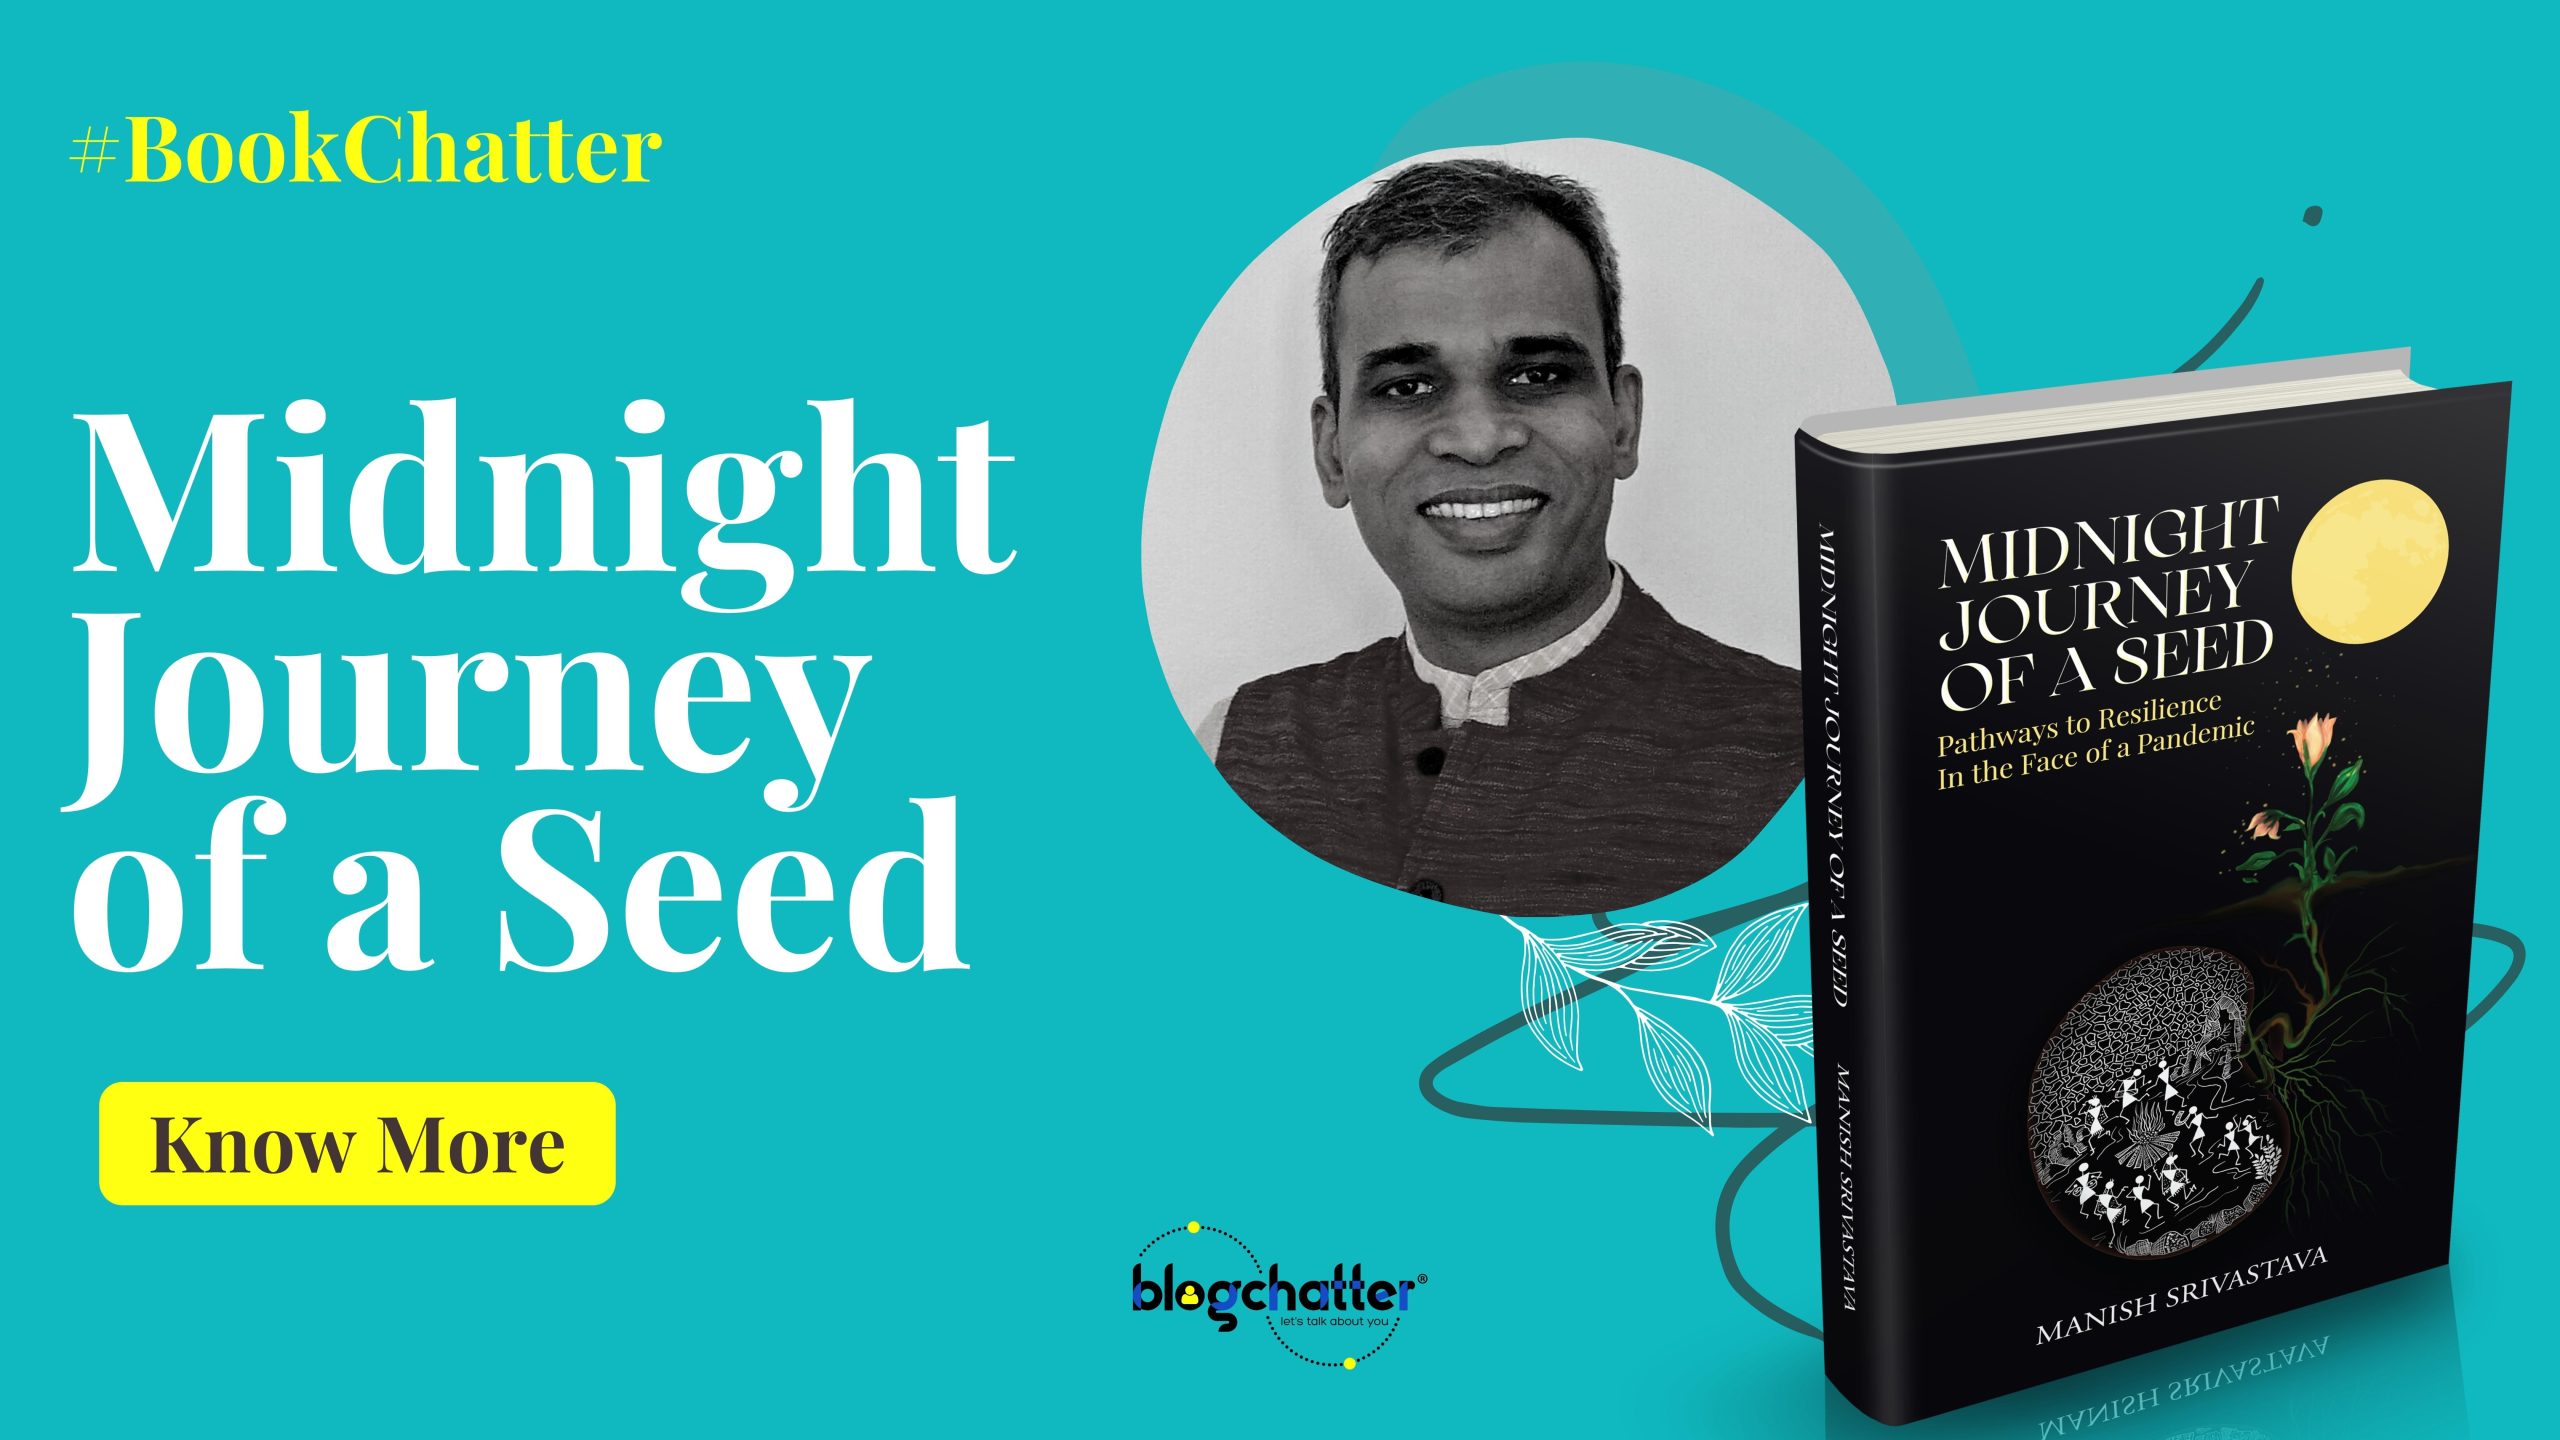 Midnight Journey of a Seed by Manish Srivastava